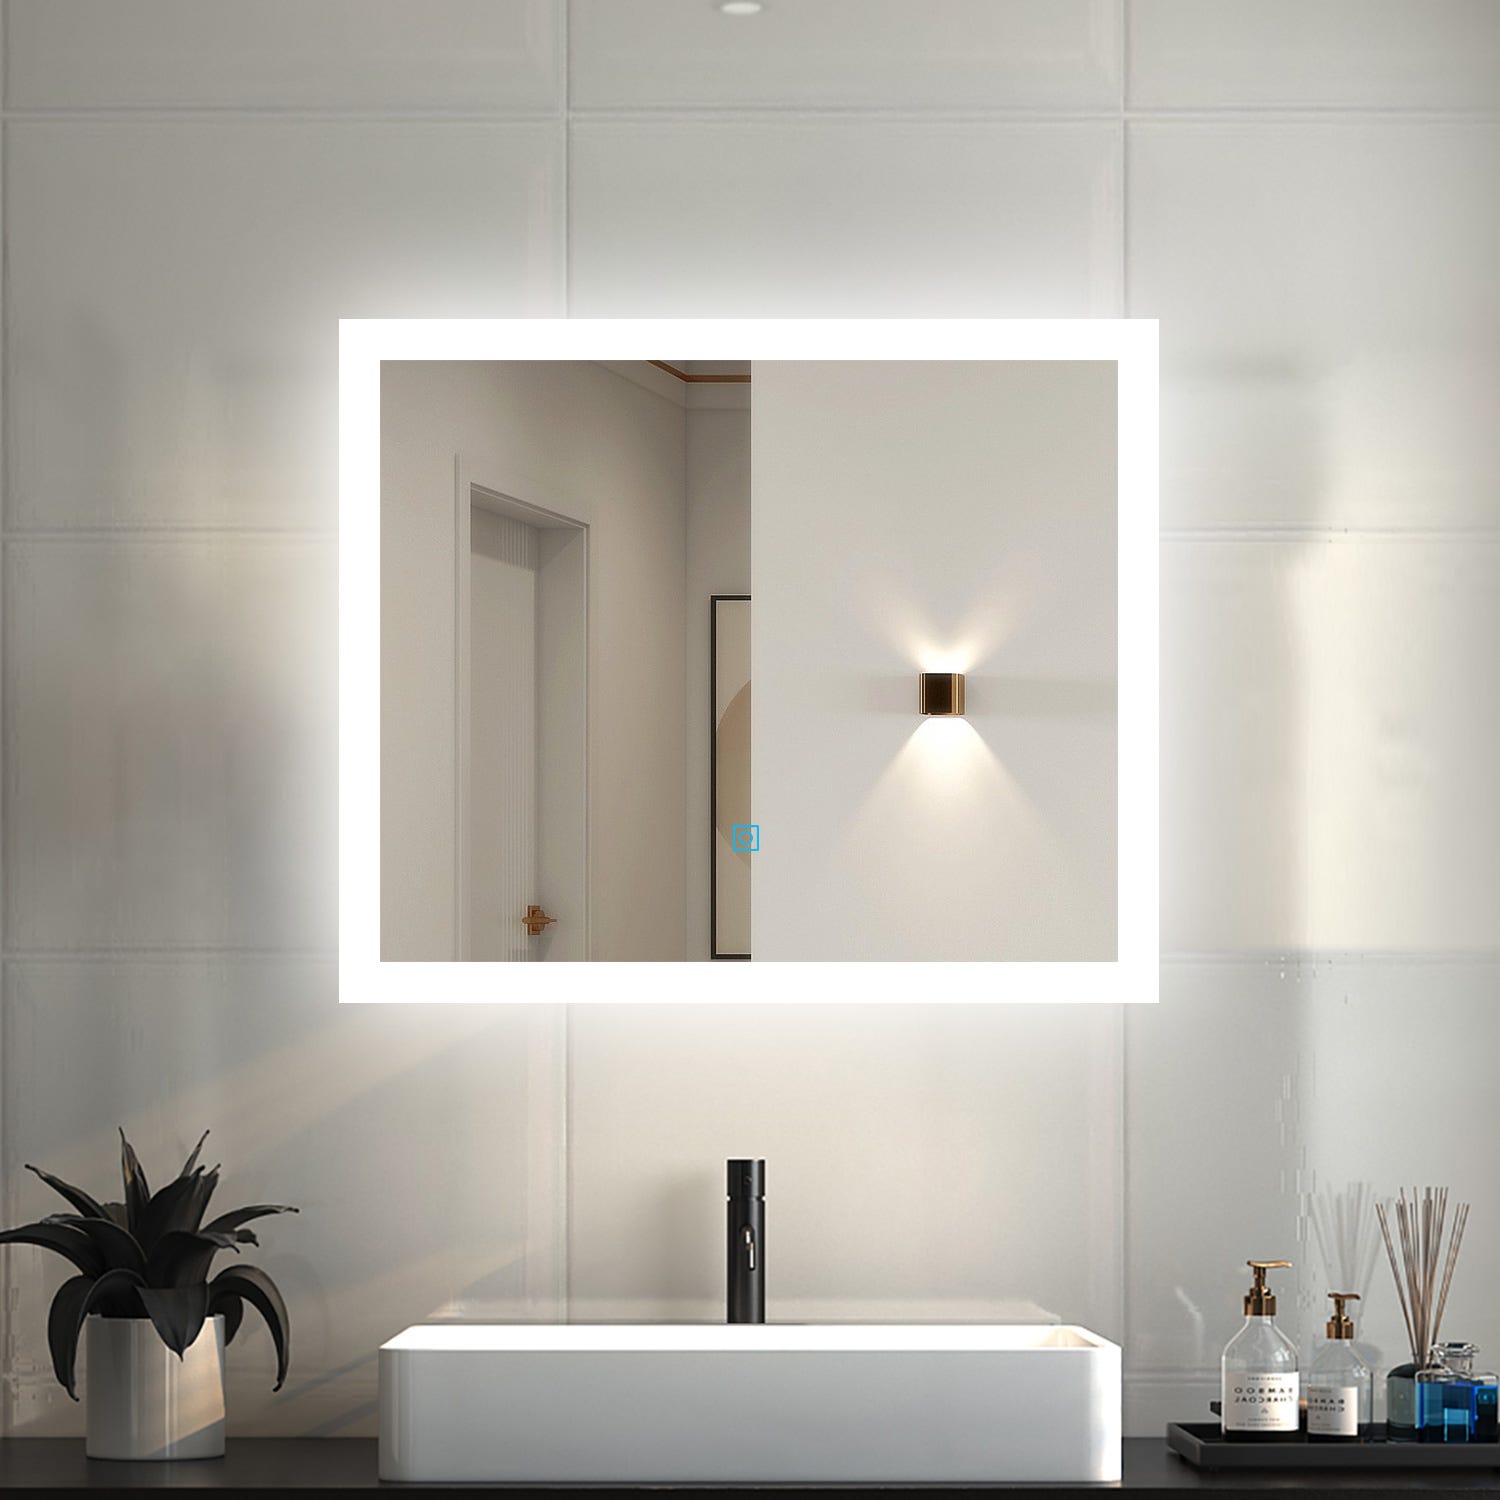 50 x 60 cm Esoejo led baño antivaho, luz blanca frío, sensor